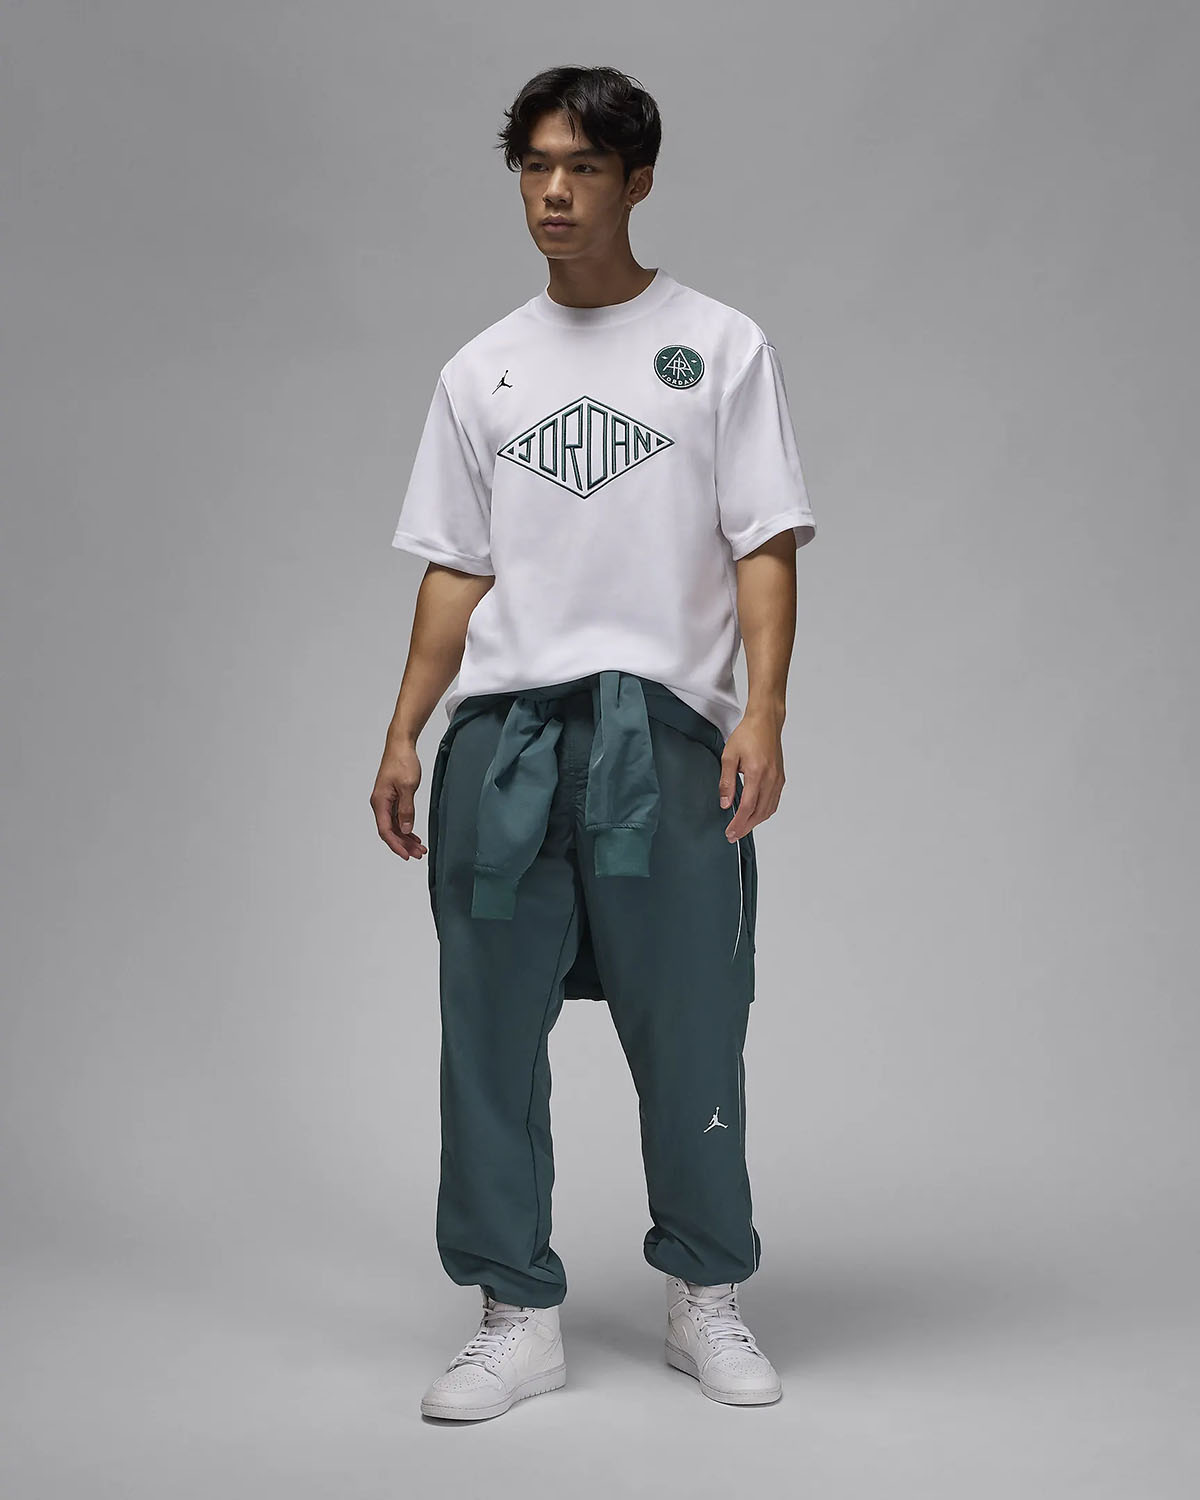 Jordan Essentials Mens Short Sleeve Top White Oxidized Green